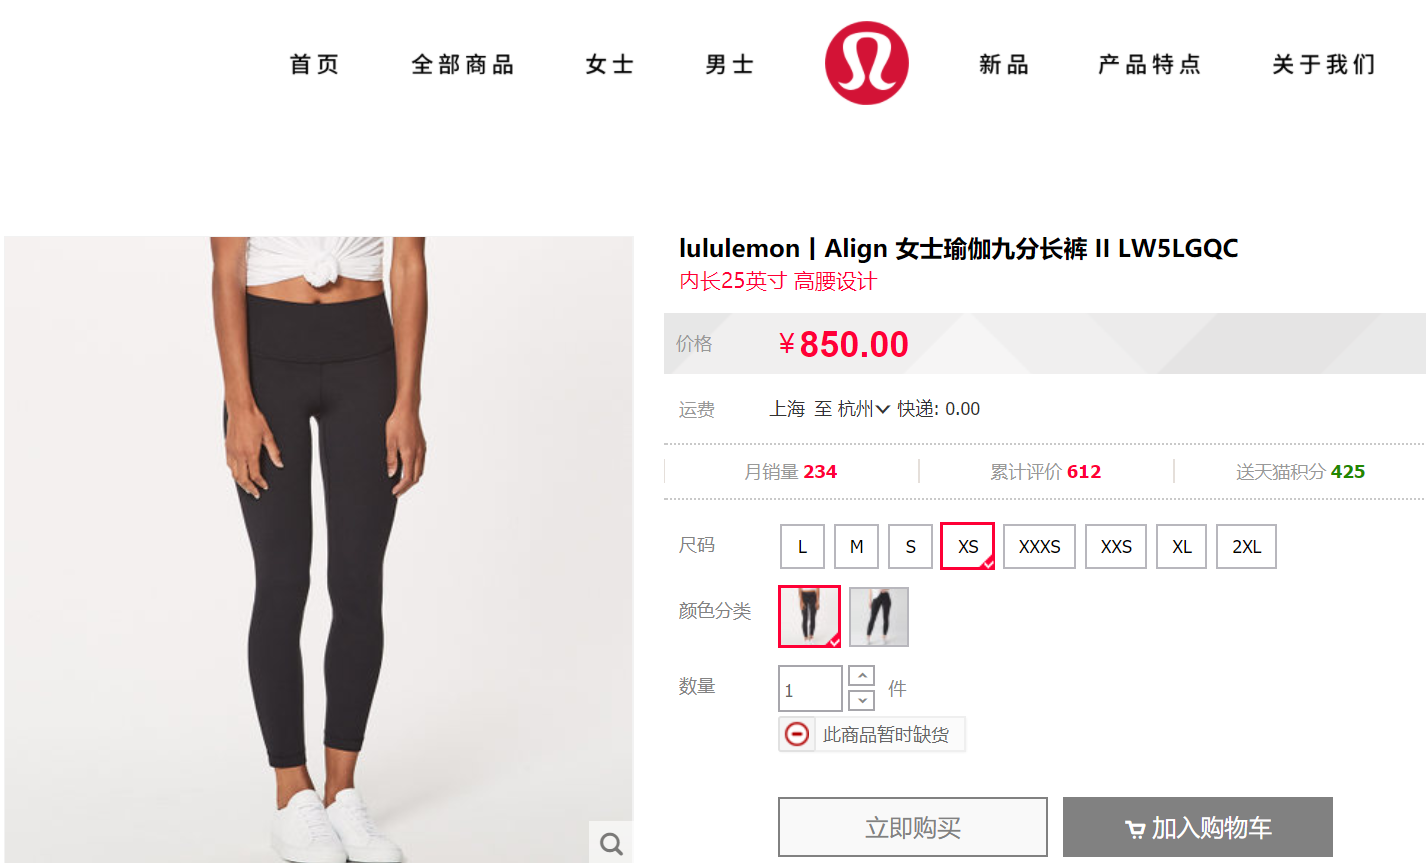 Lululemon official store ecommerce sportswear legging price